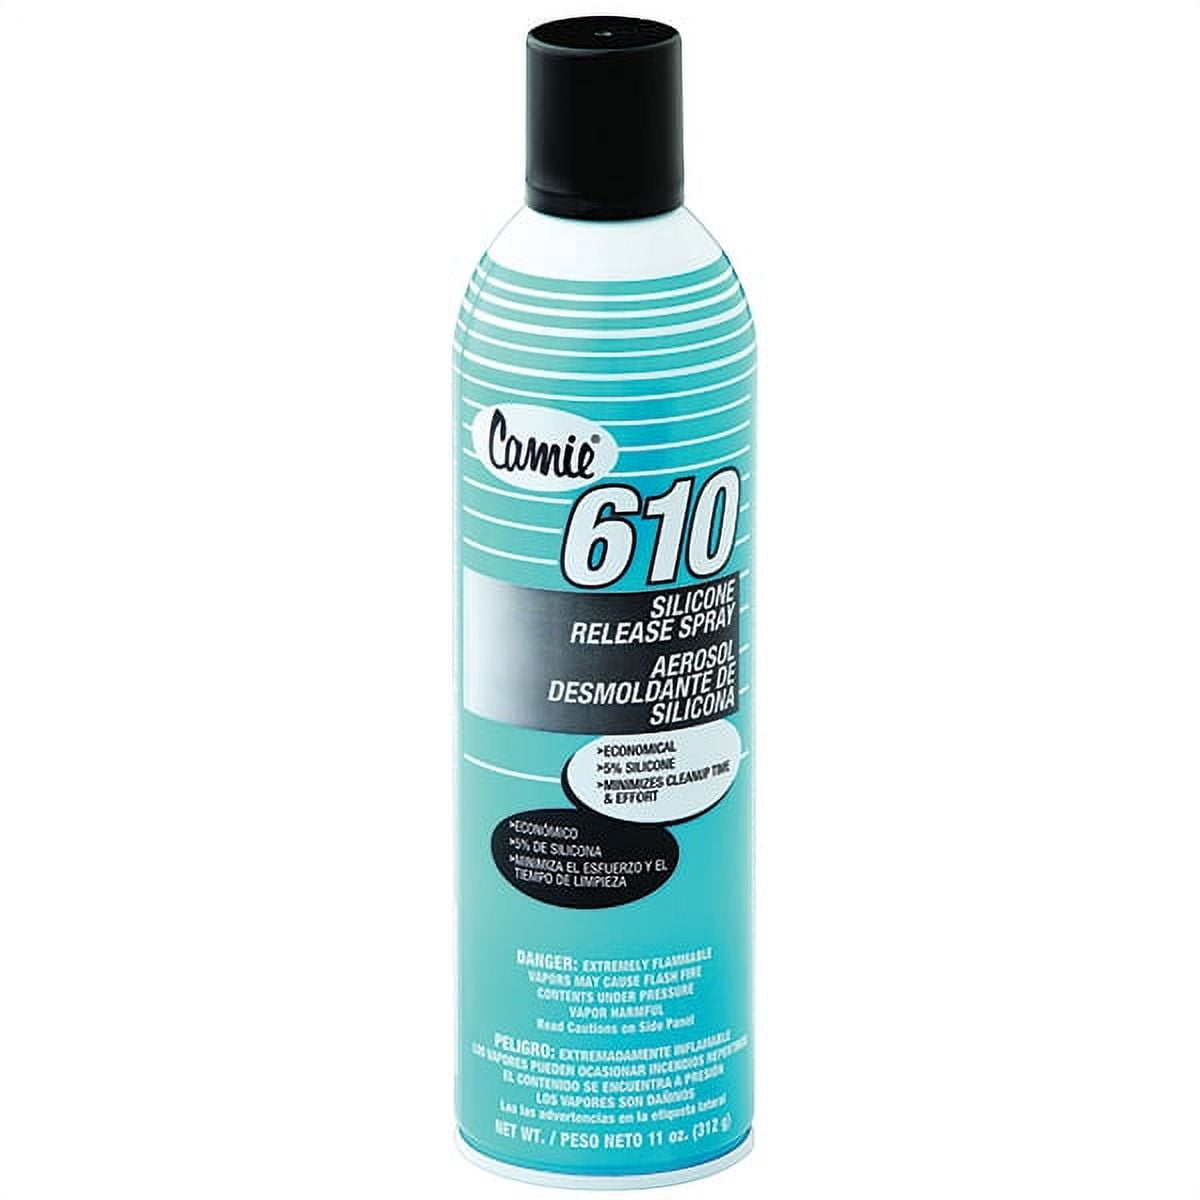 Camie 610 Silicone Release Spray (1 Case)